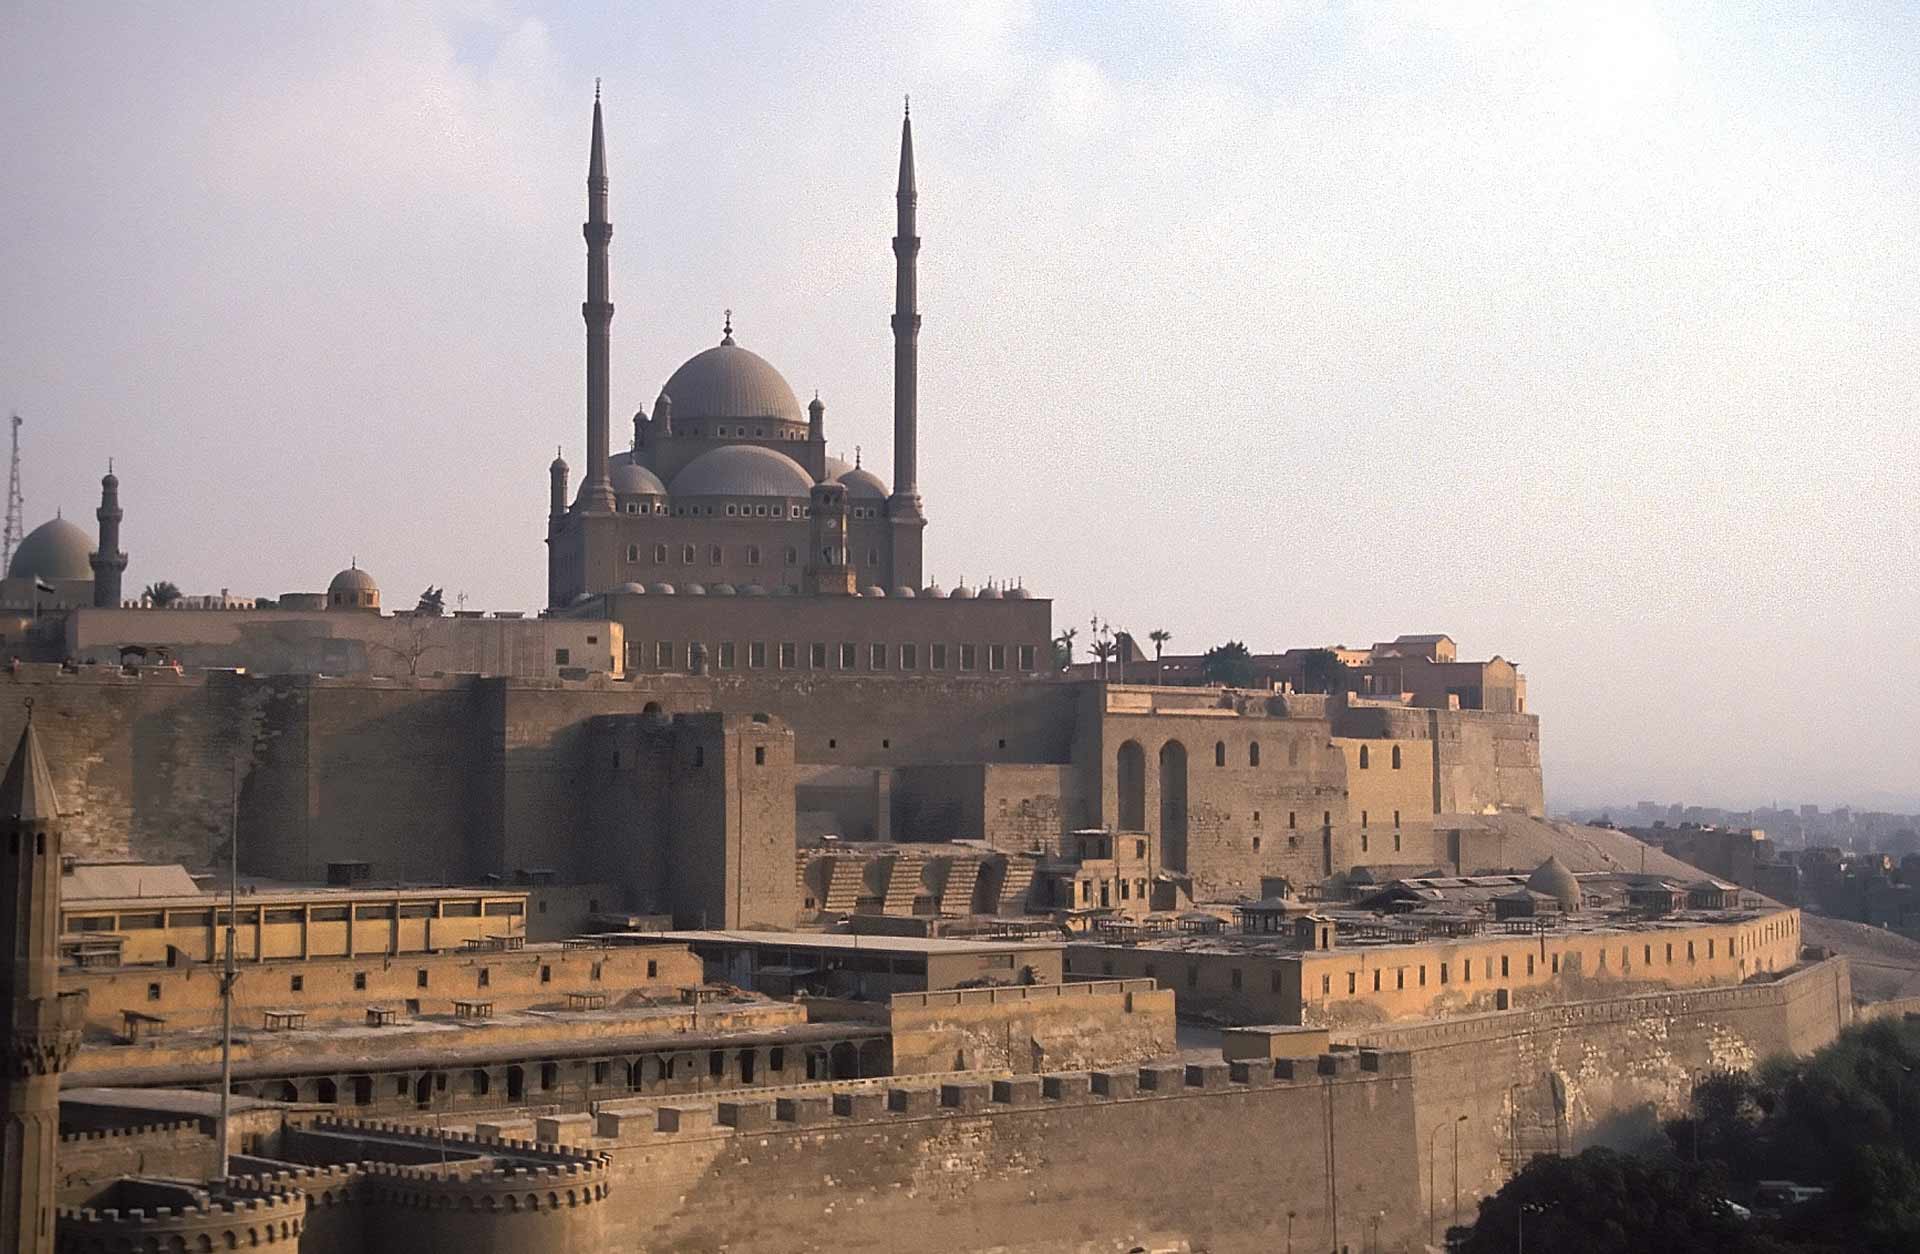 Mohammed Ali Mosque in the Citadel of Cairo, Al Qahirah, Egypt